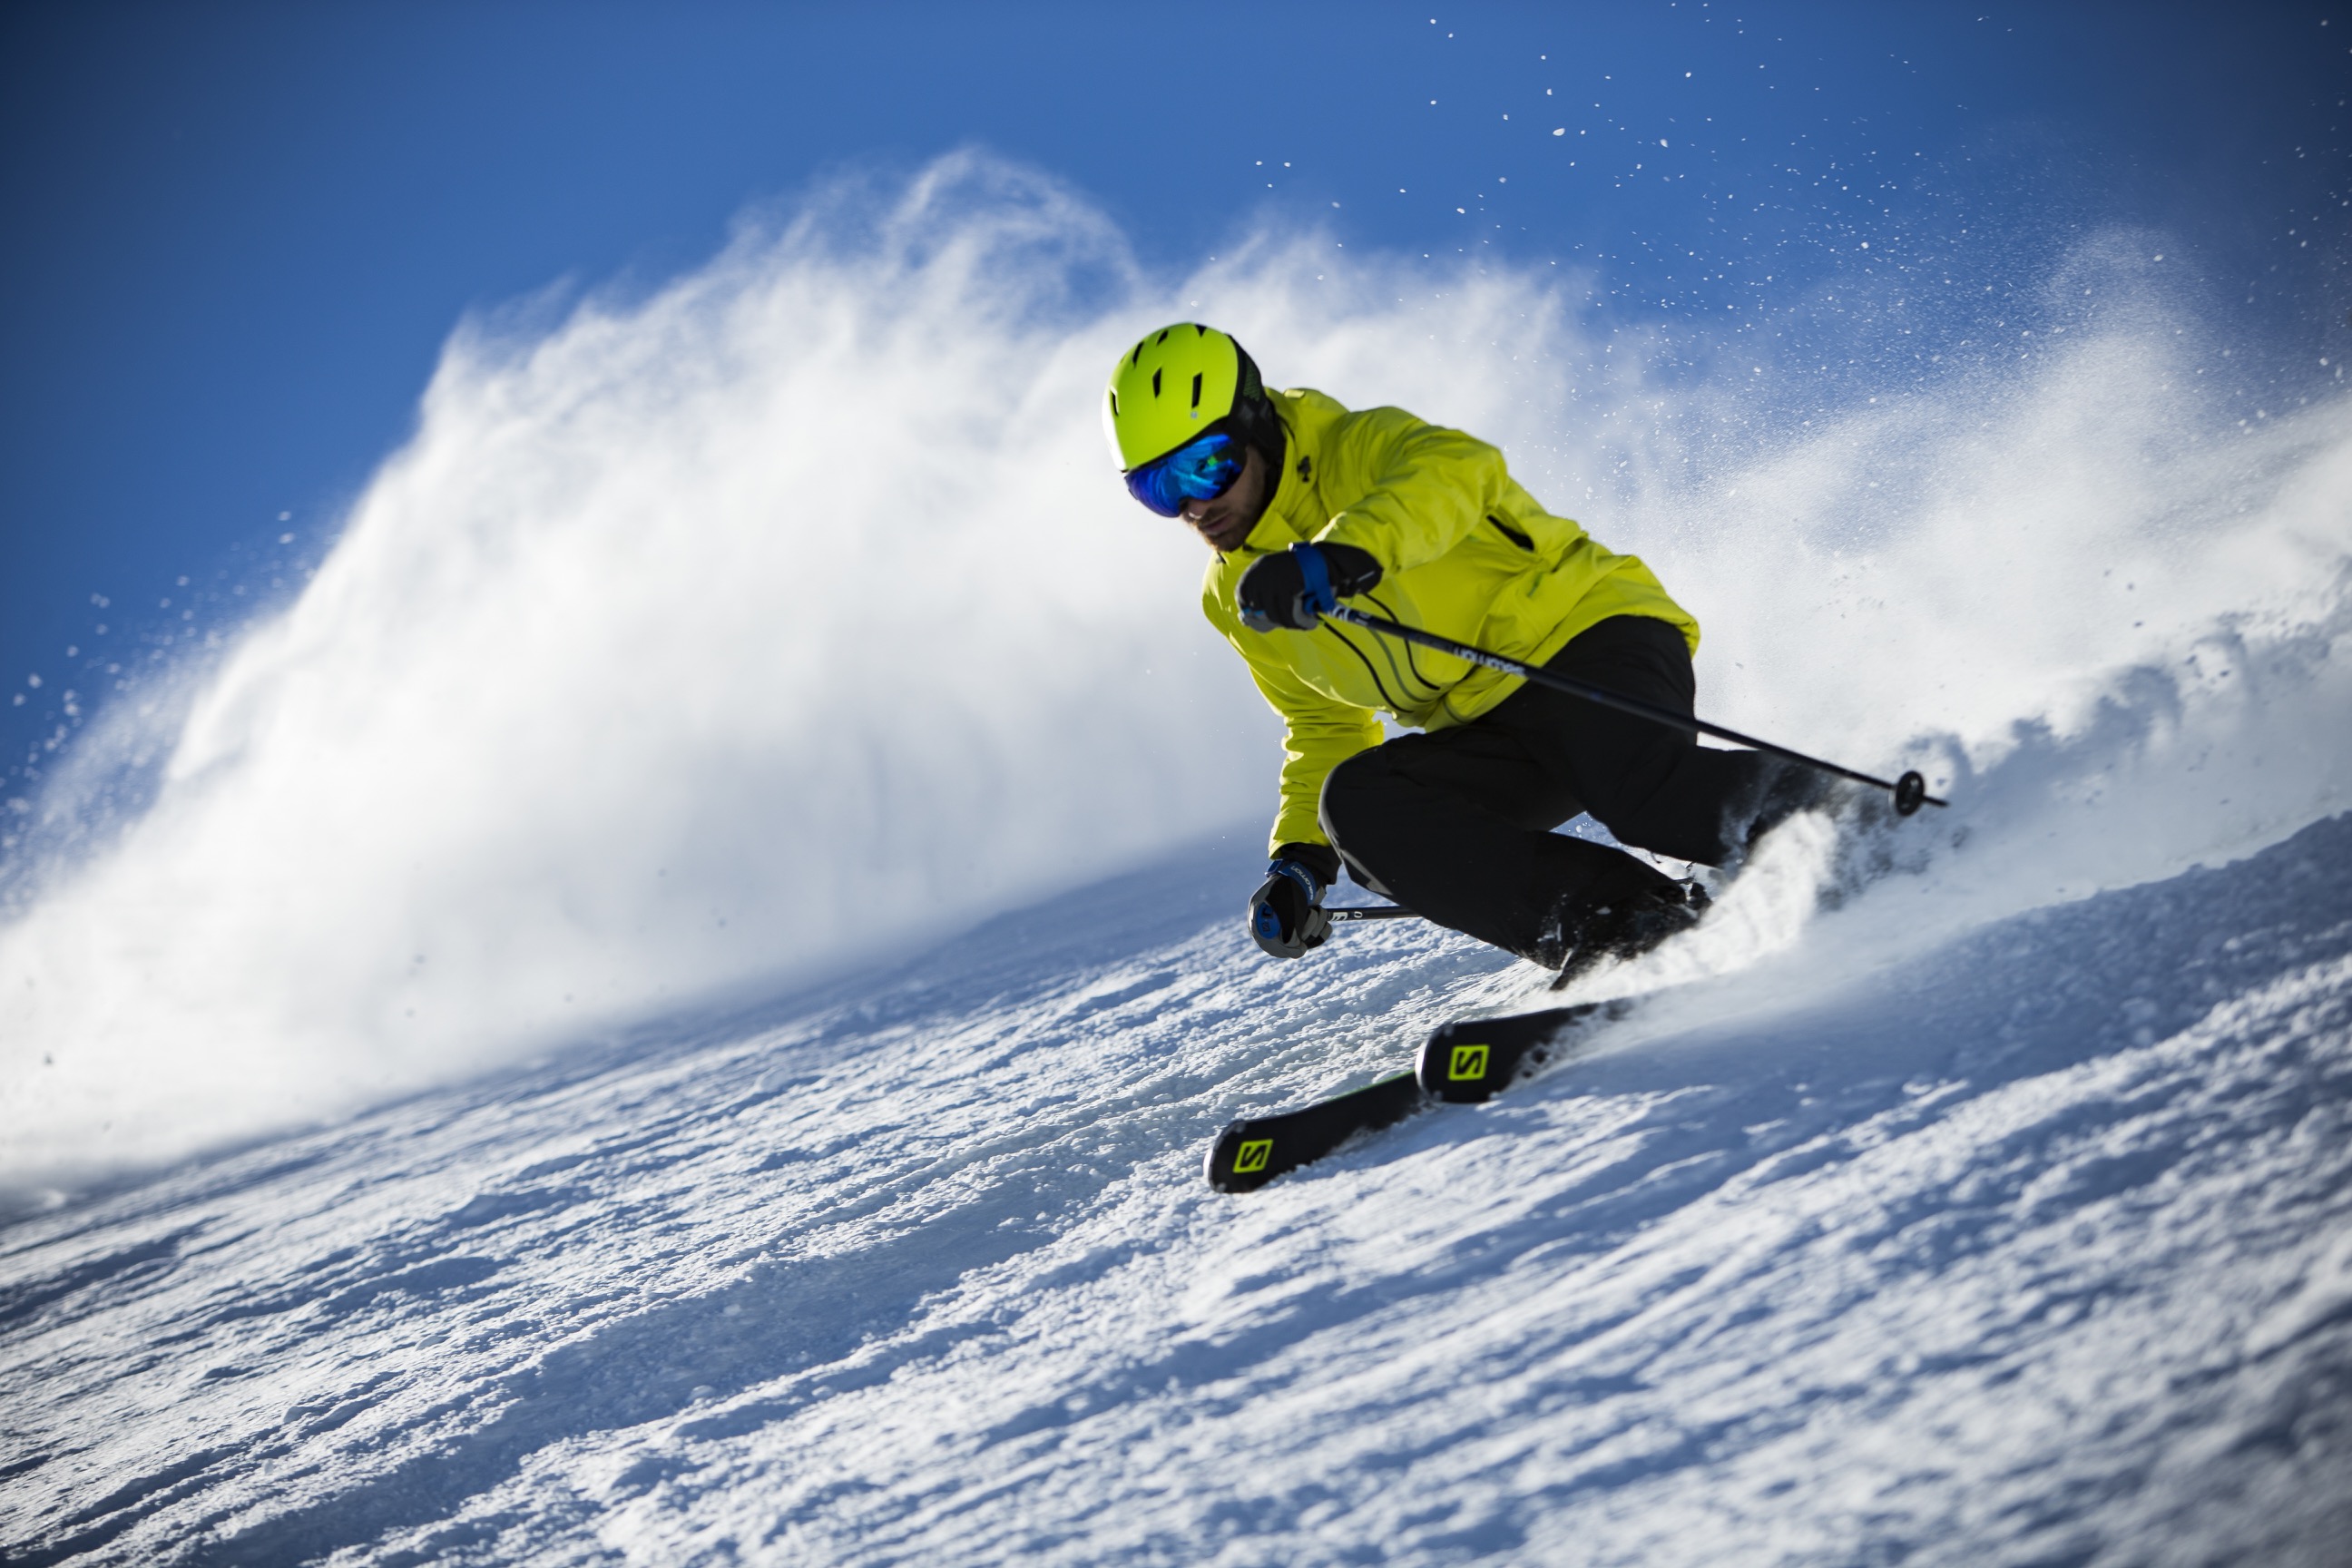 Sensation of Skiing Like Pro: Salomon Skis Offer Edge Grip”